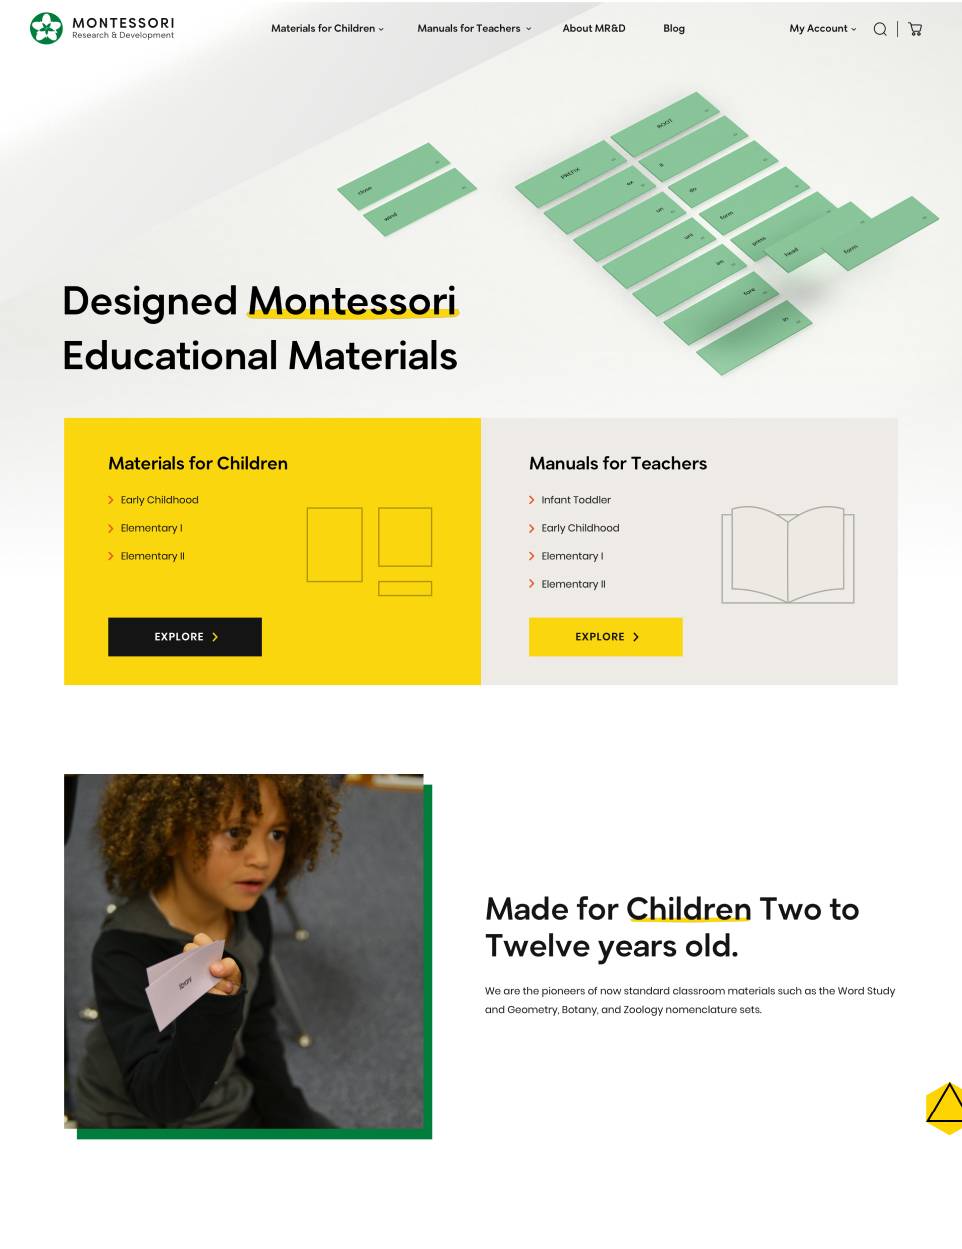 Montessori RD website design